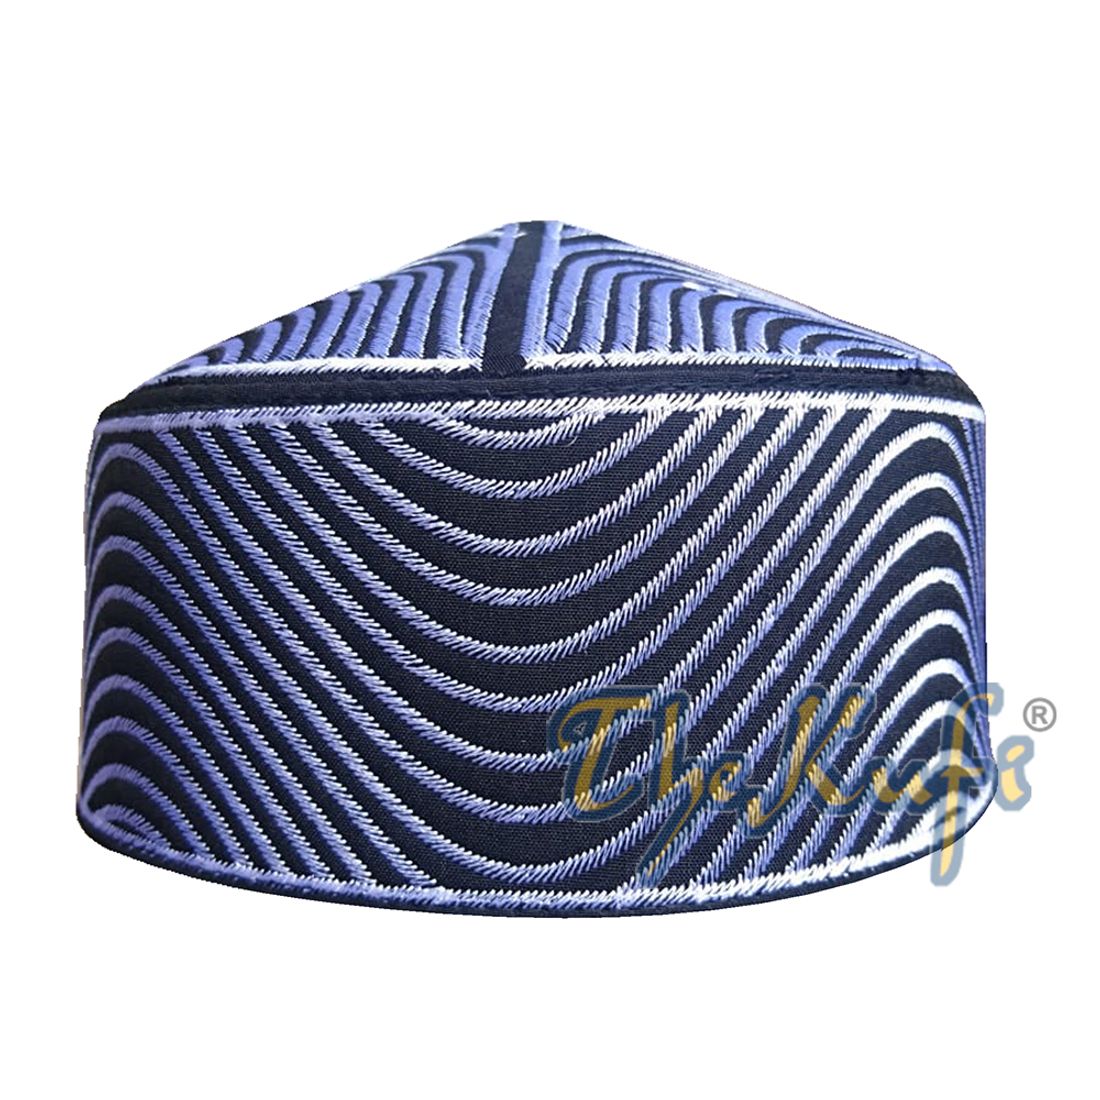 Exclusive Black Round Peak-top Wave Design Kufi Hat with Silver-tone Embroidery Semi-rigid Taj Crown Cap